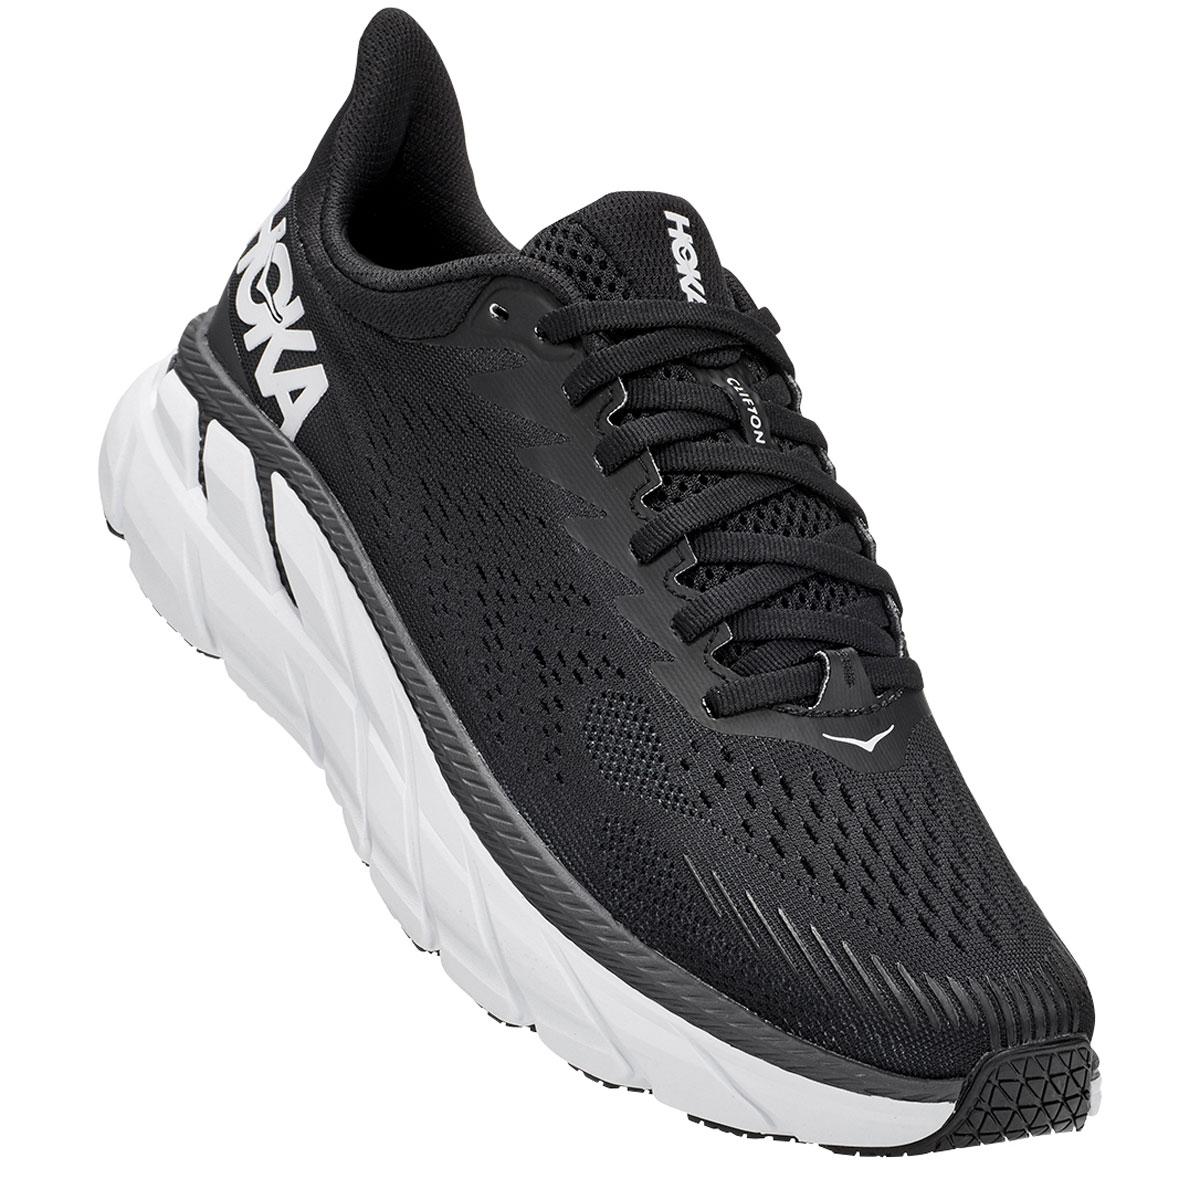 Hoka One One Clifton 7 Running Shoe in Black/White (Black) - Lyst